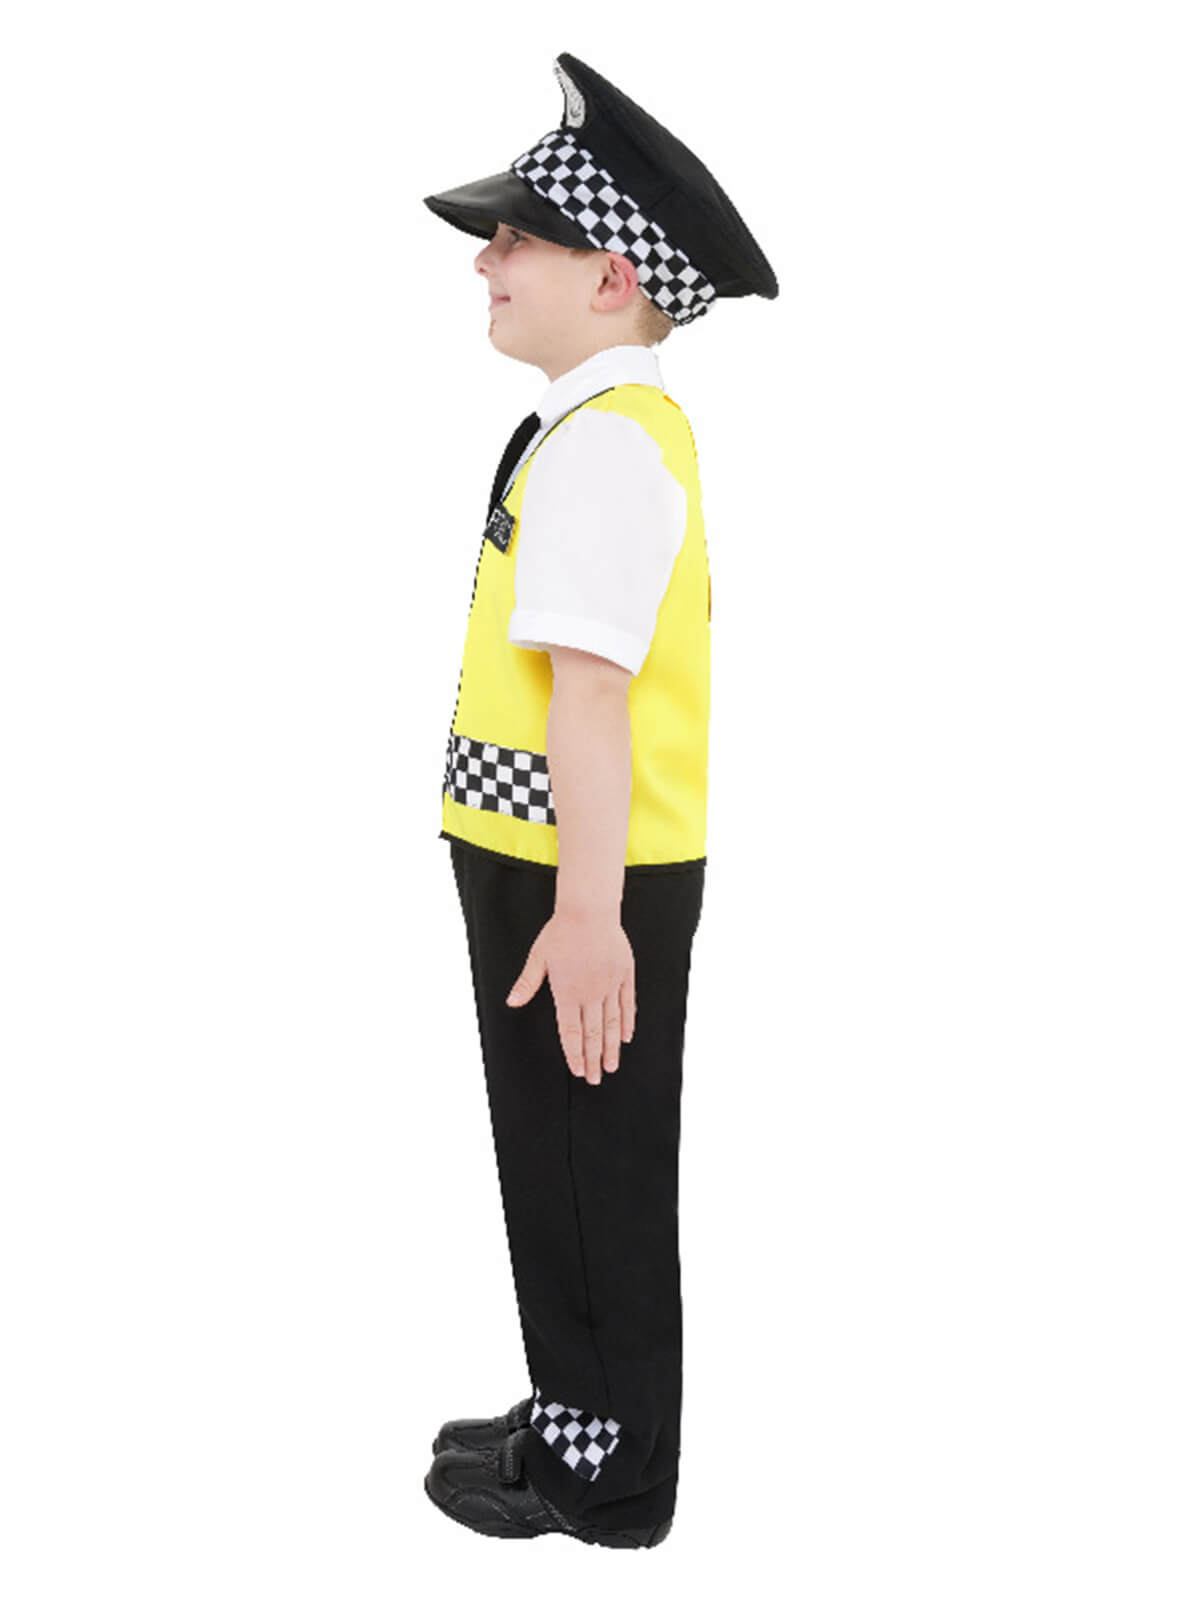 Police Costume, Black